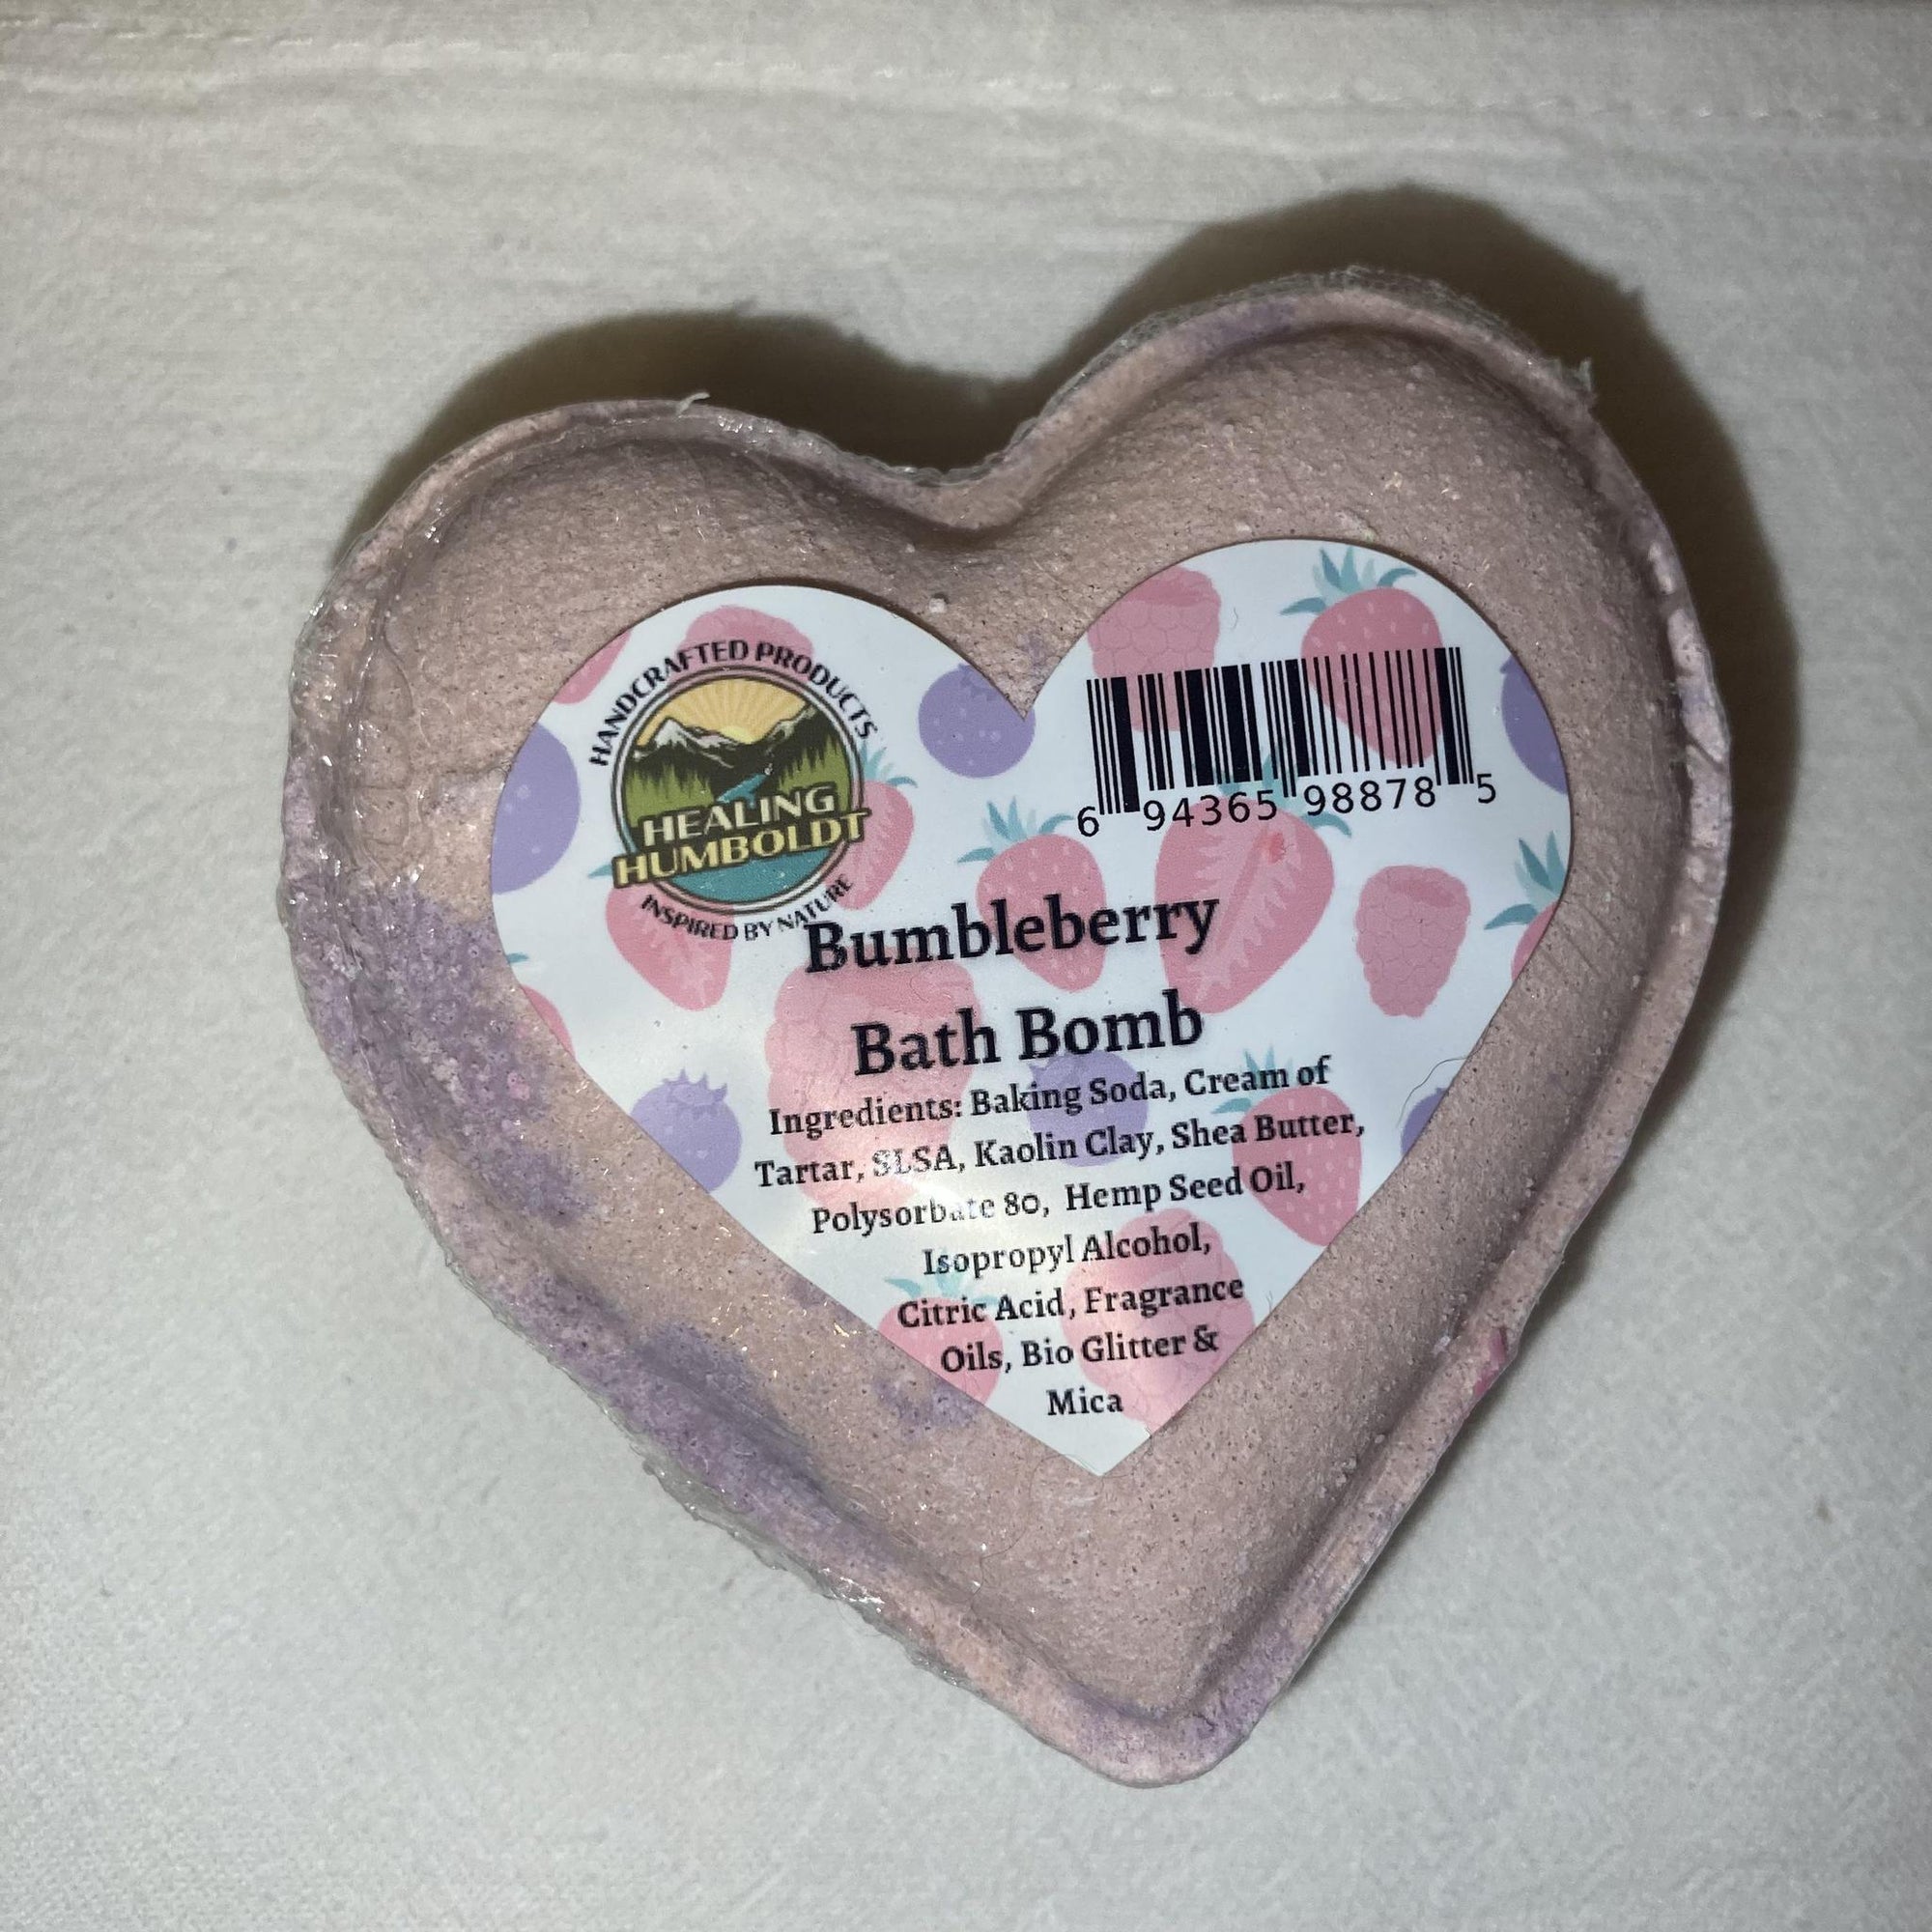 Healing Humboldt Bath Bombs Bumbleberry